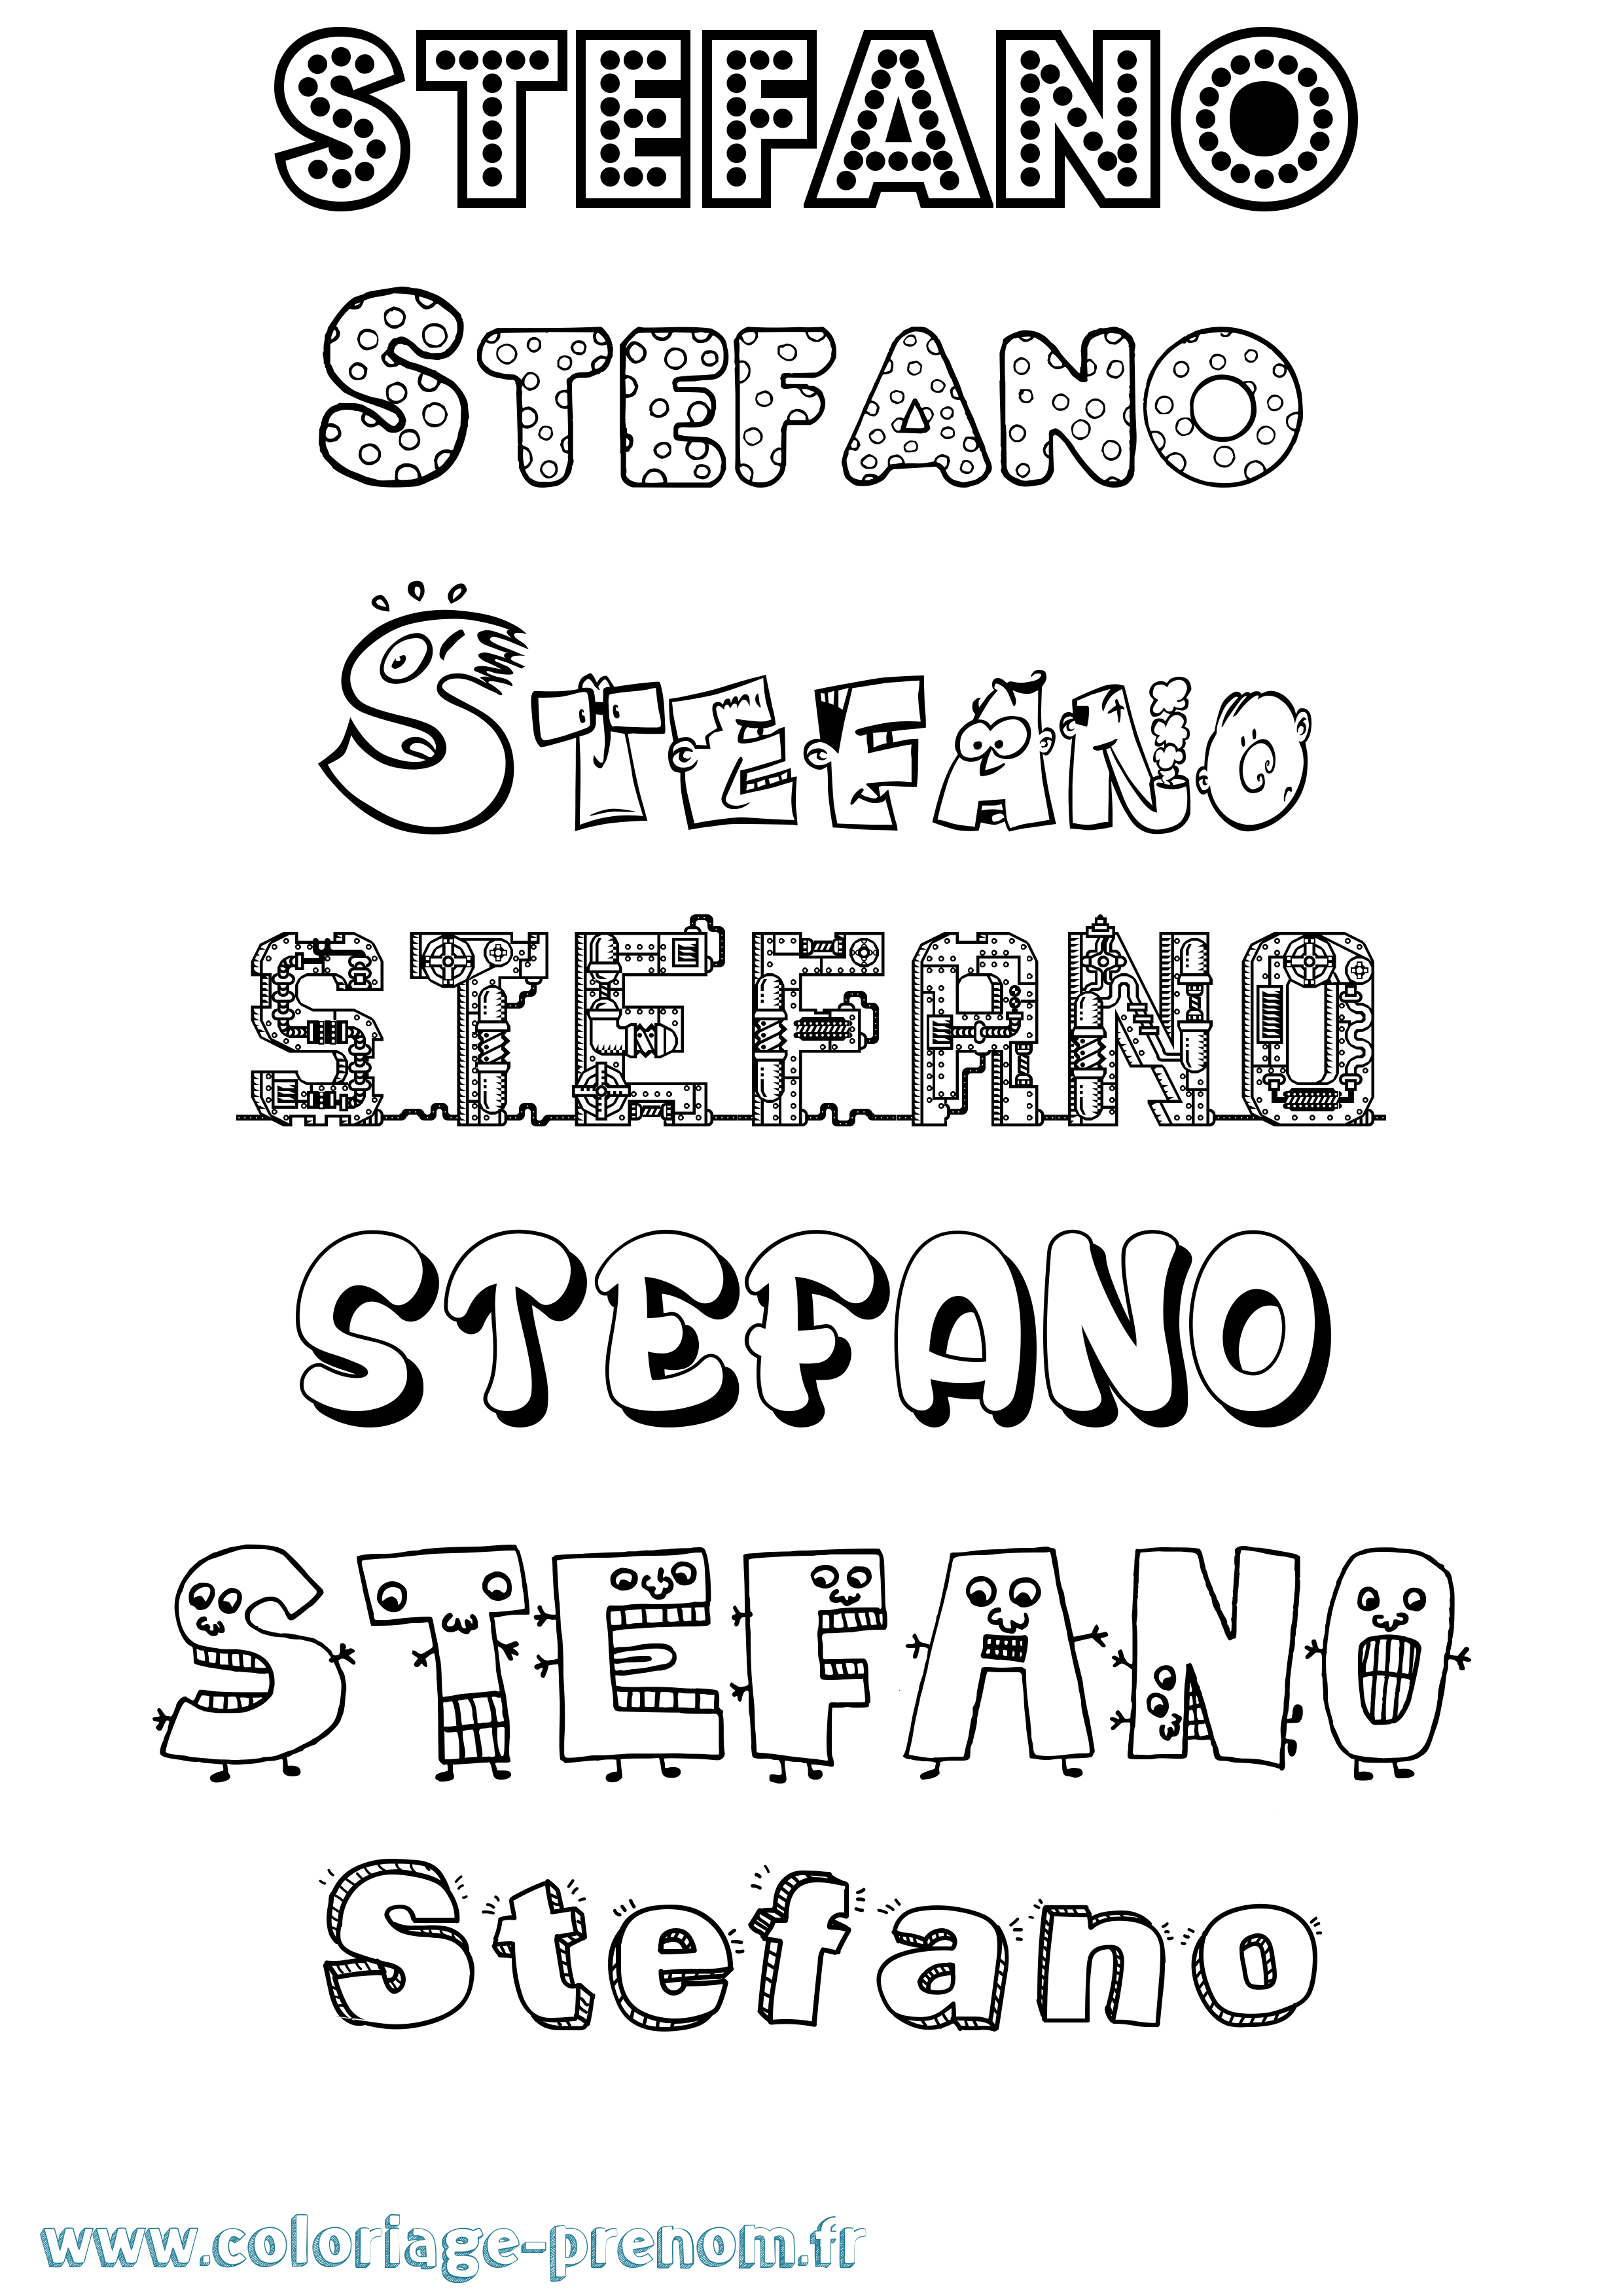 Coloriage prénom Stefano Fun